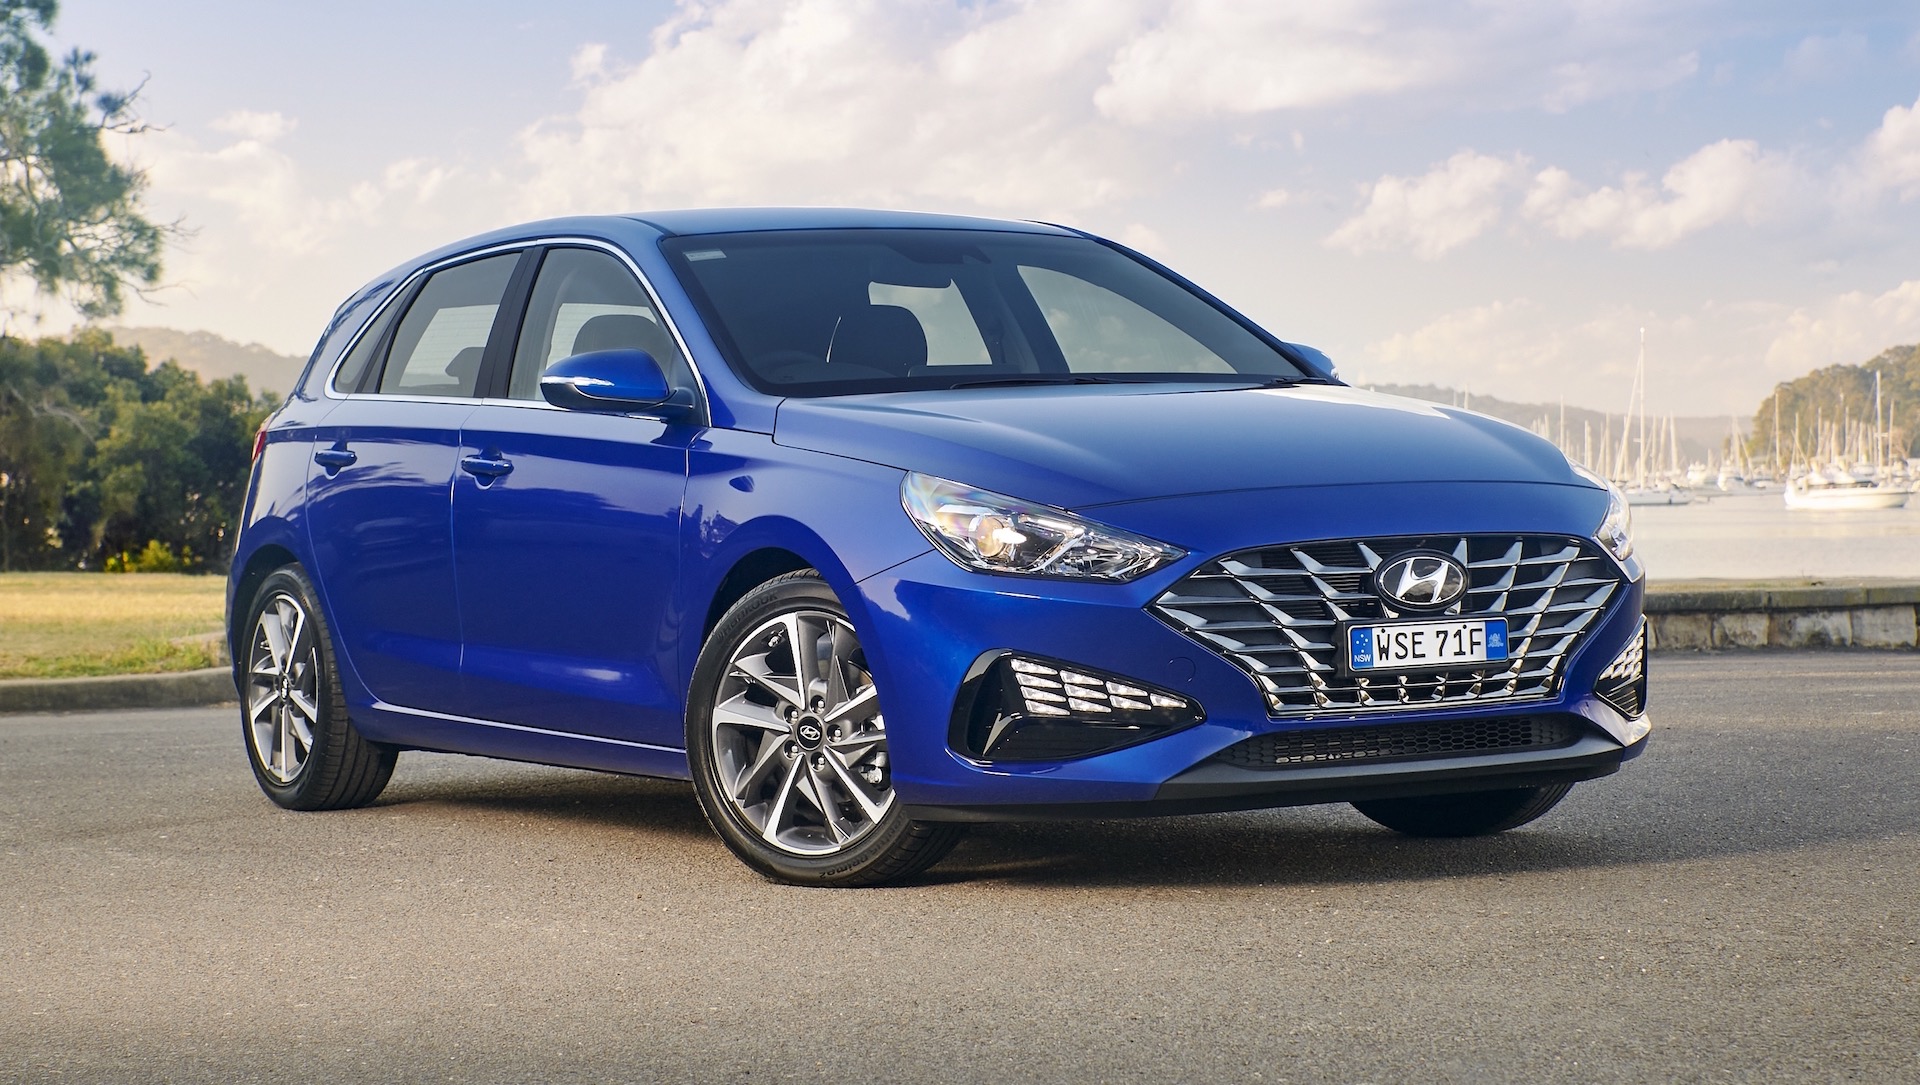 2021 Hyundai i30 hatch now on sale in Australia – PerformanceDrive